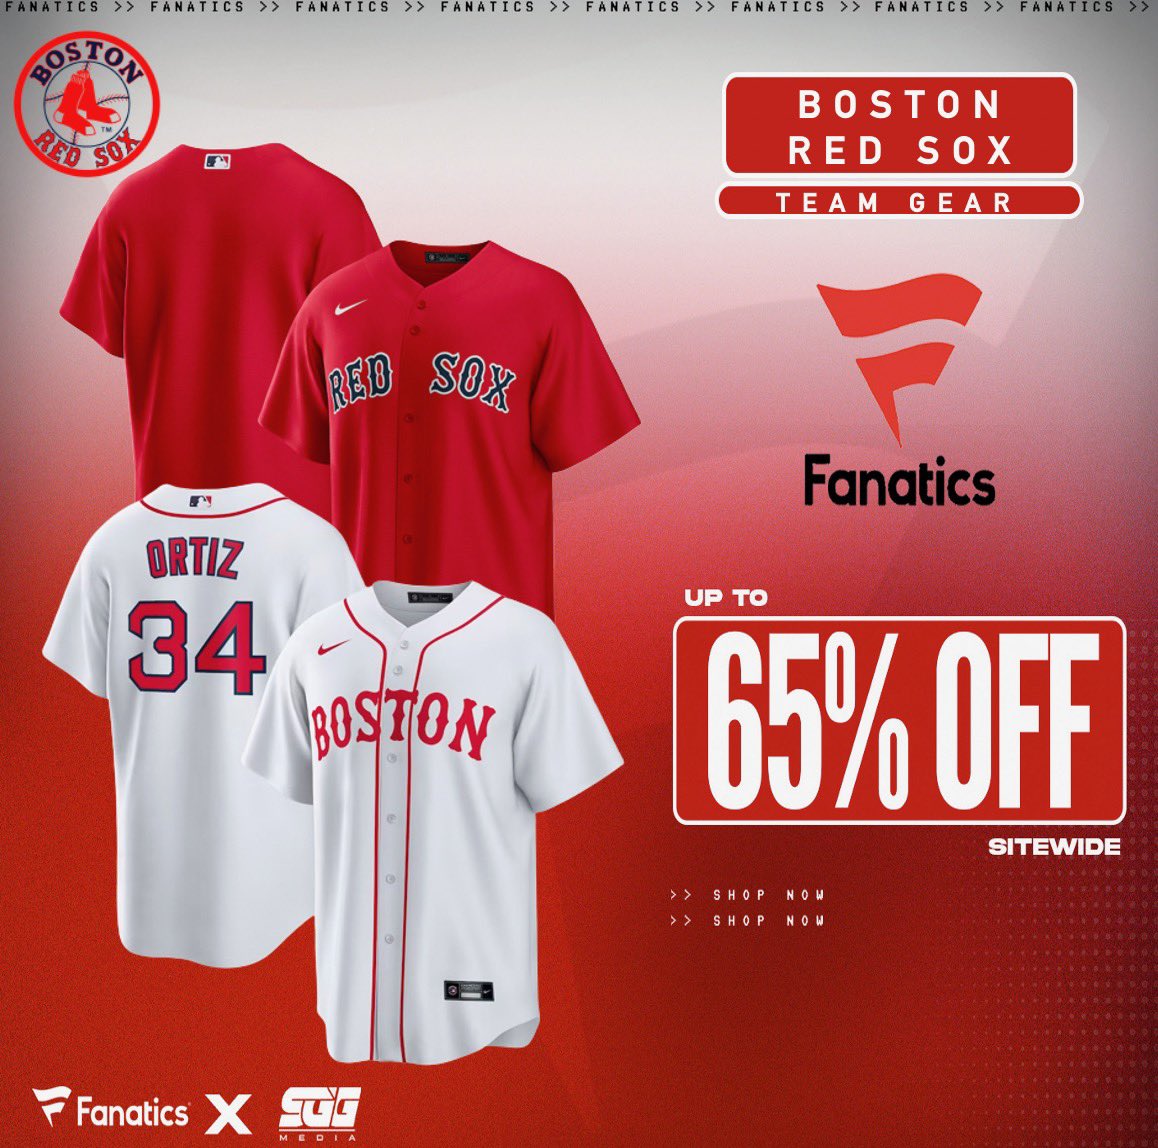 SGG Promos on X: MLB SUPER SALE, @Fanatics, UP TO 65% OFF BOSTON RED SOX  GEAR! 🏆 Take advantage of Fanatics EXCLUSIVE offer and get up to 65% OFF  on Red Sox